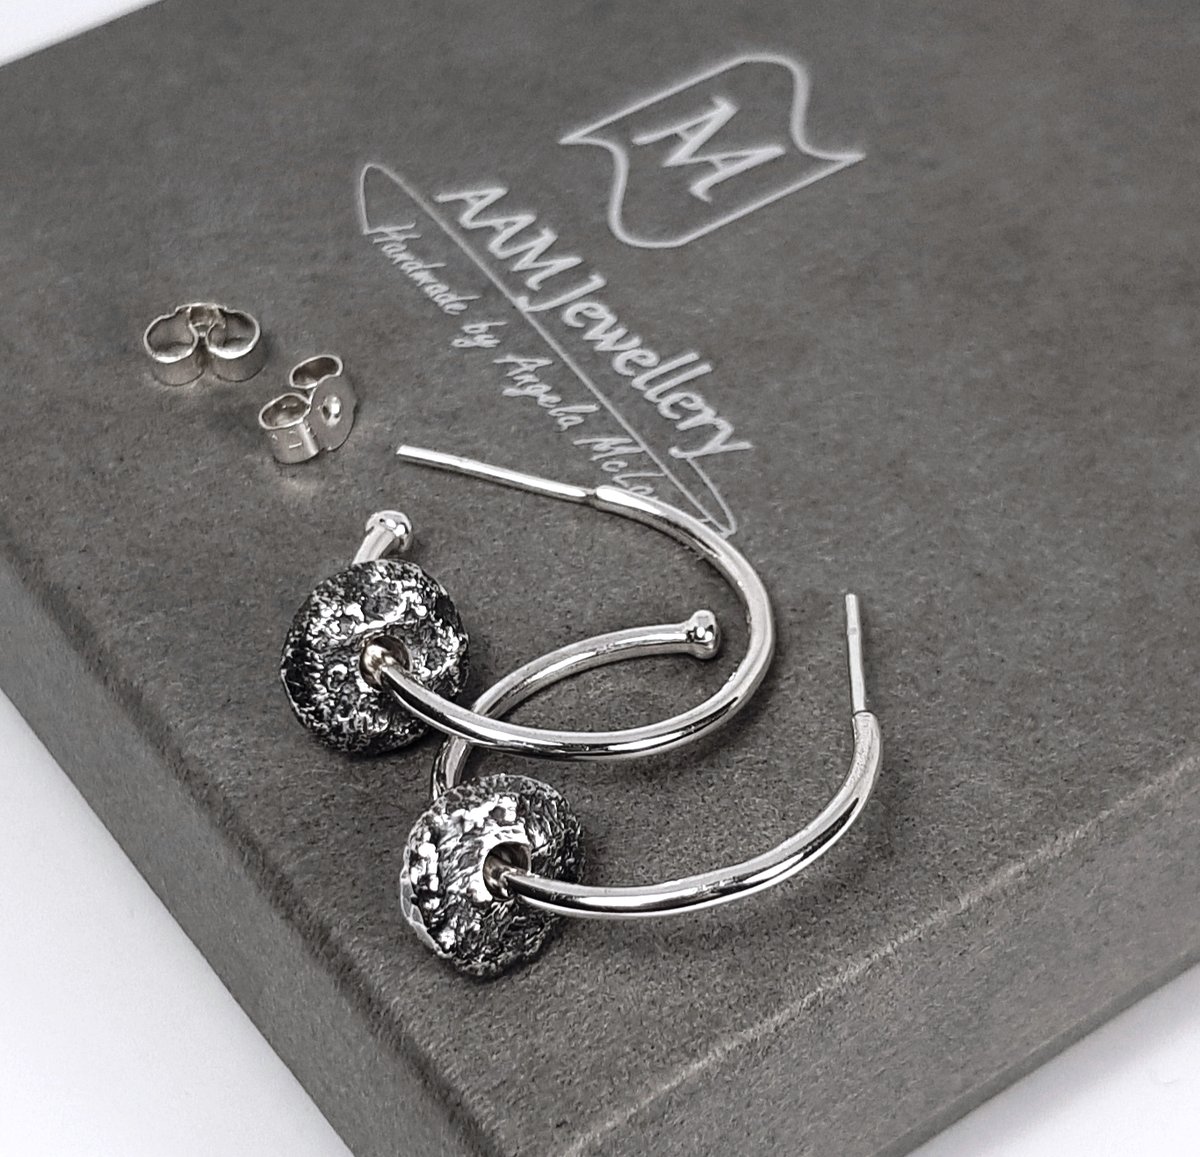 Image of Silver Hoop Earrings with Pebble Charms, Handmade Sterling Silver Charm Hoops